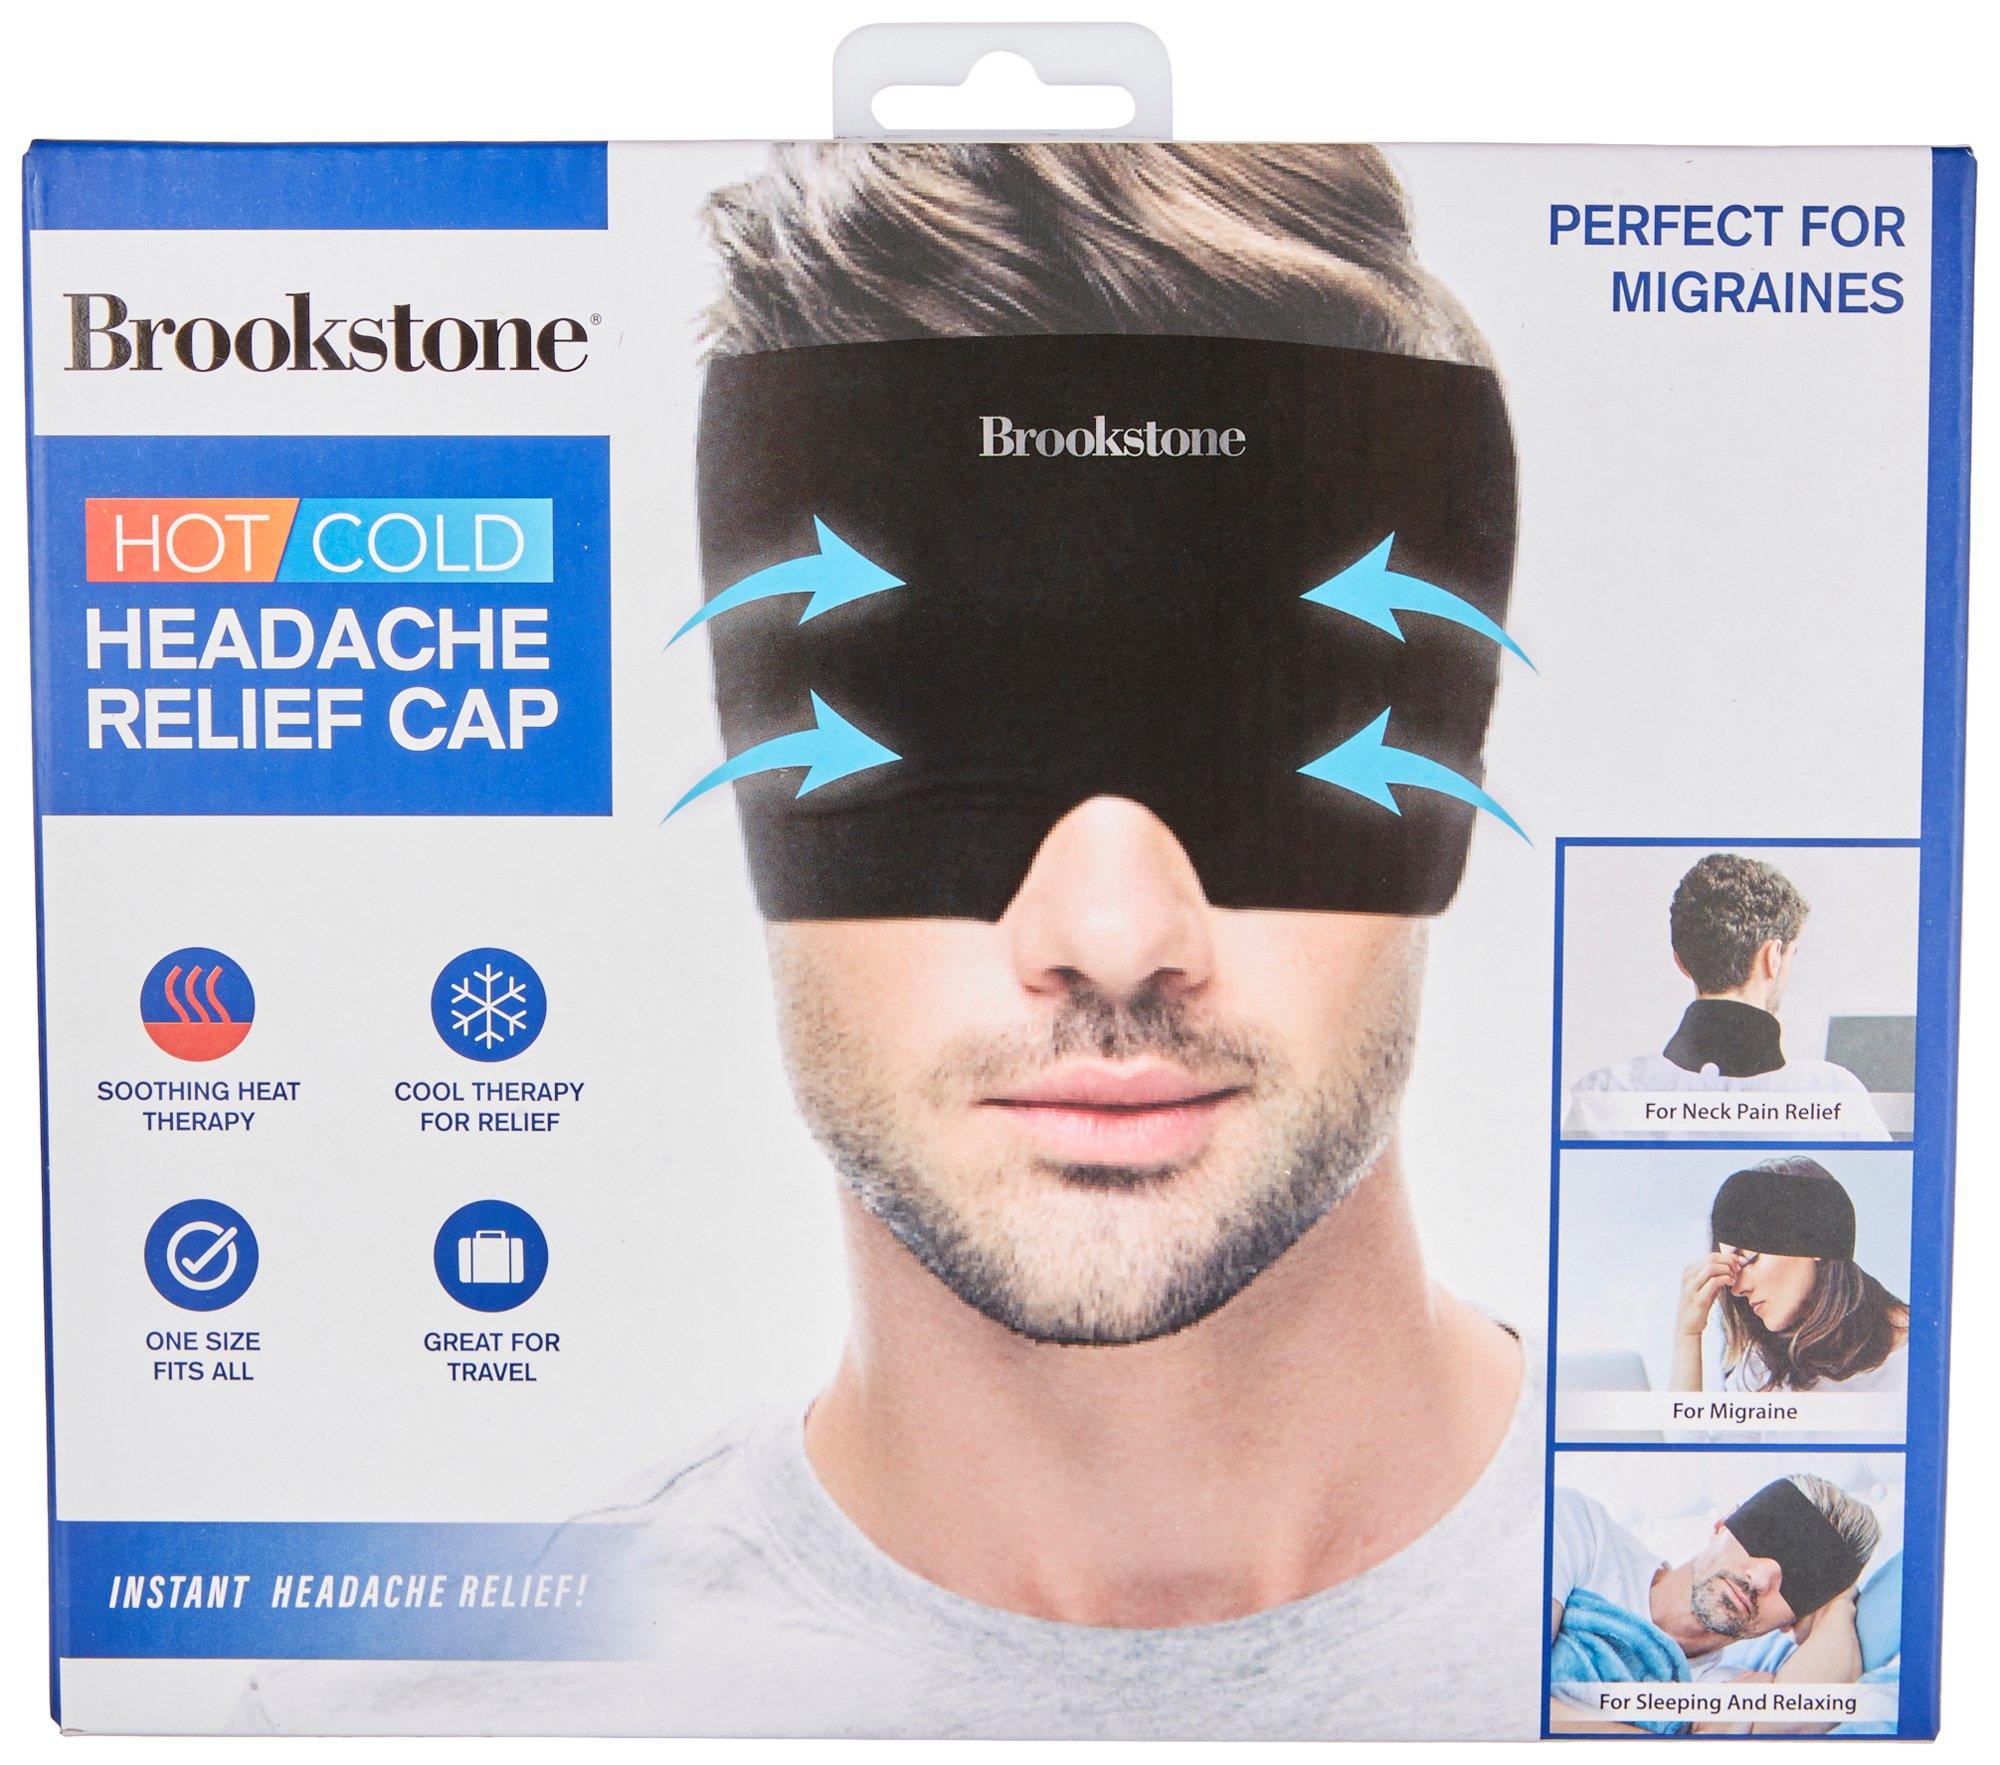 Hot/Cold Headache Relief Cap